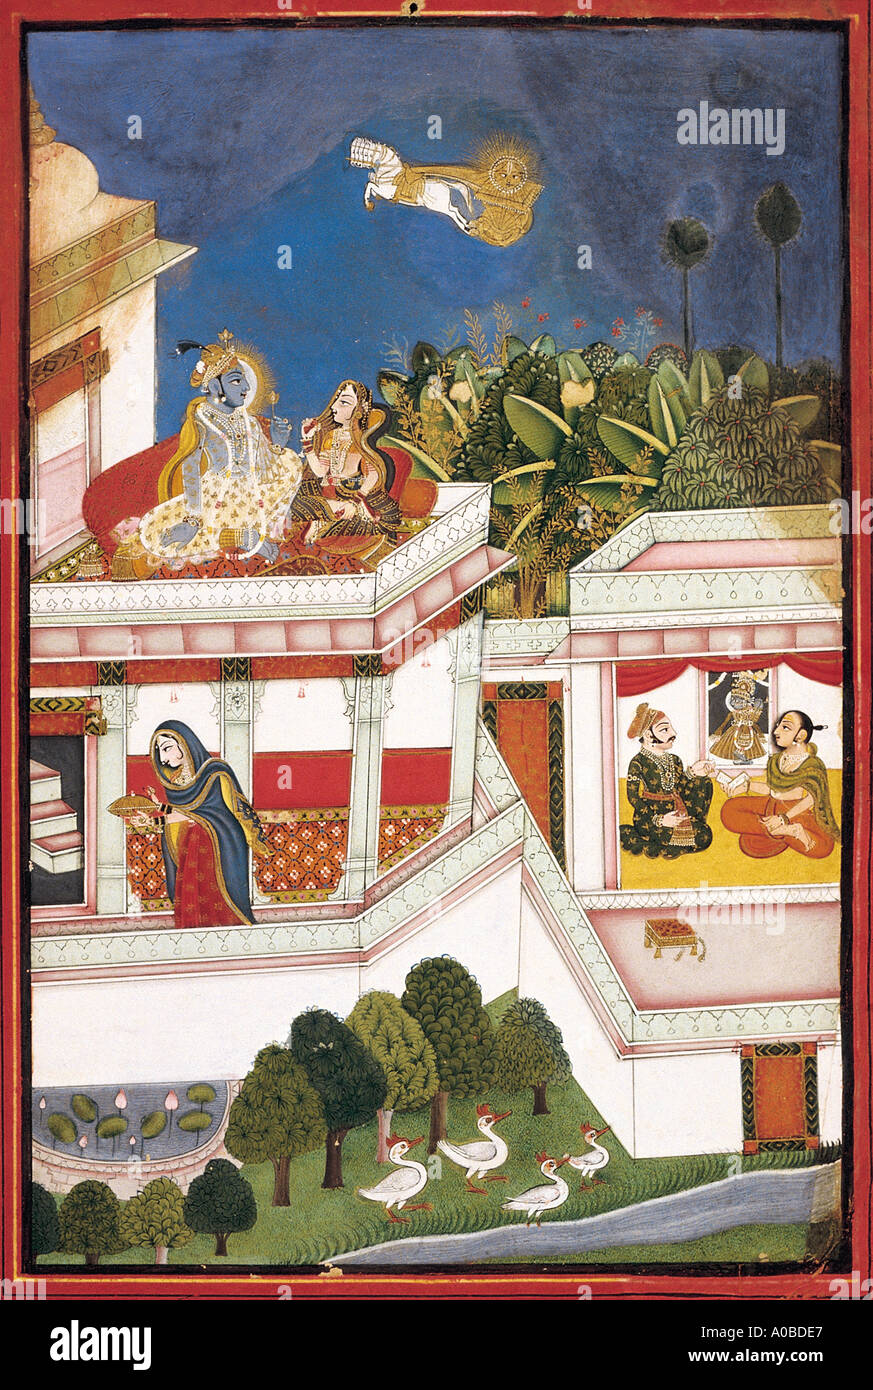 Baramasa Szene. Kotah, Rajasthan, Indien. Datiert: 1750 n. Chr. Original Größe: 27,8 x 18,2 cm. Stockfoto